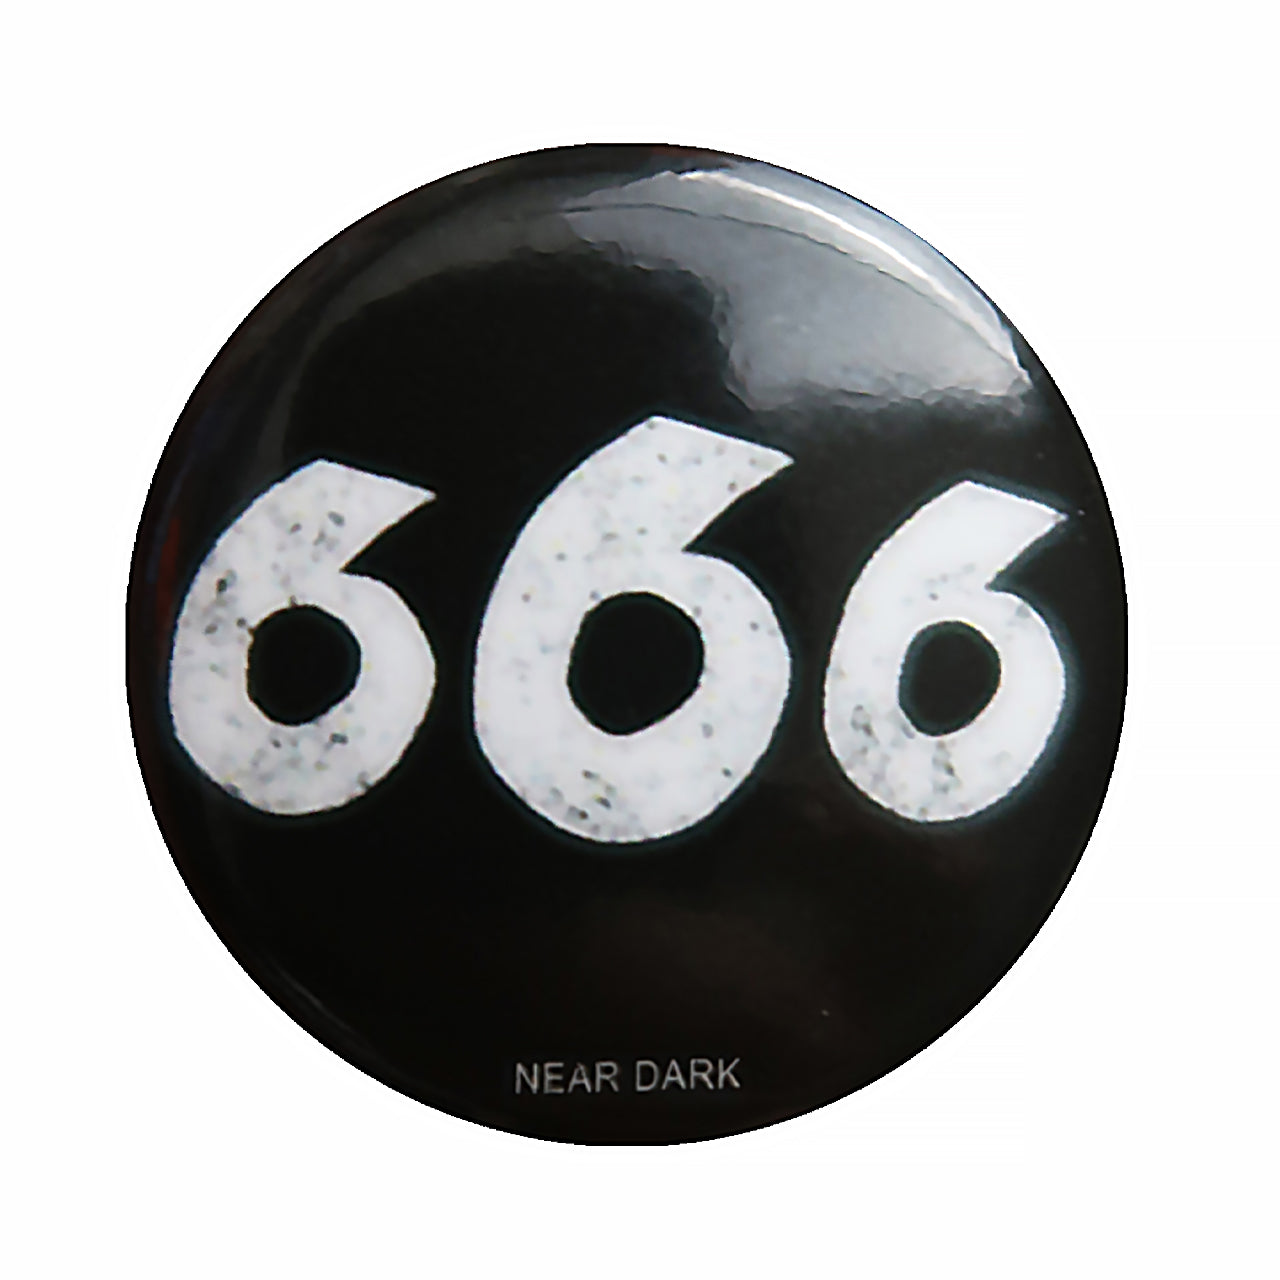 666 - 1" NEAR DARK Button